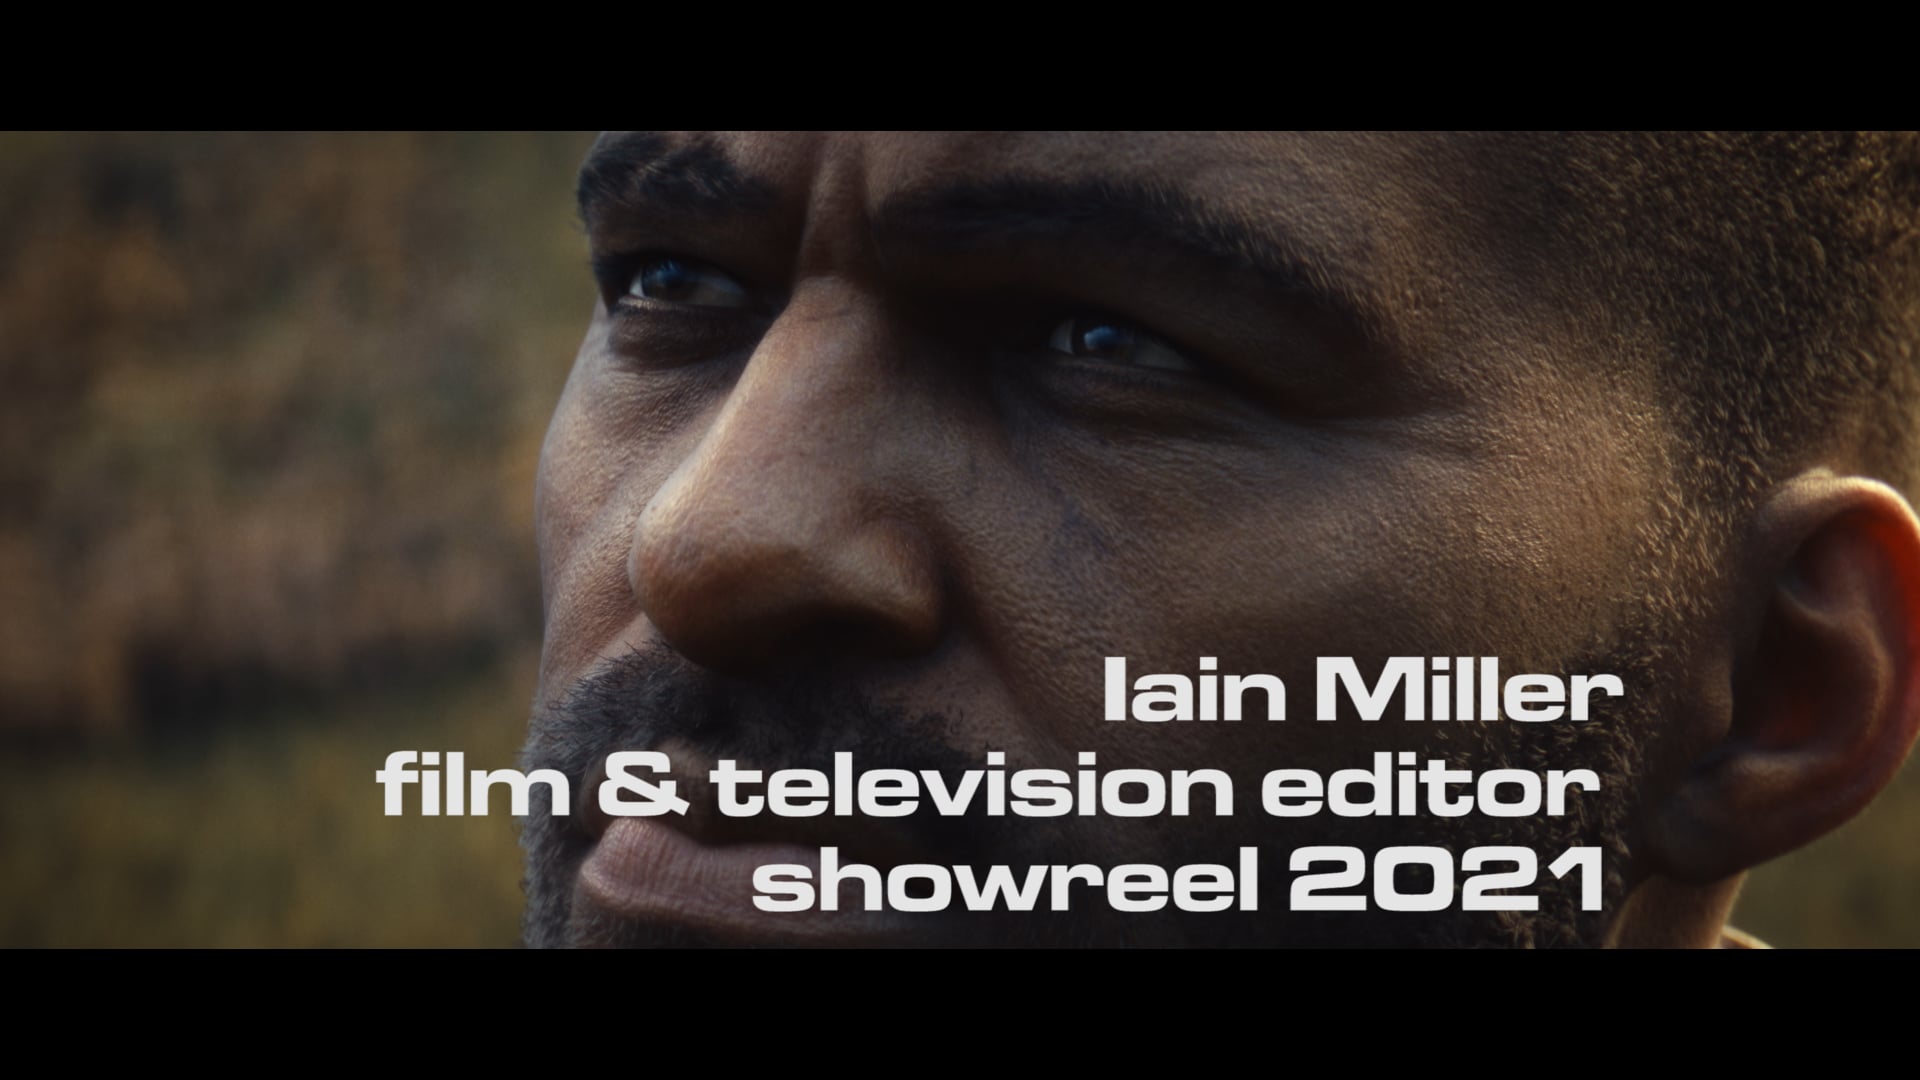 Iain Miller, film & television editor showreel 2021